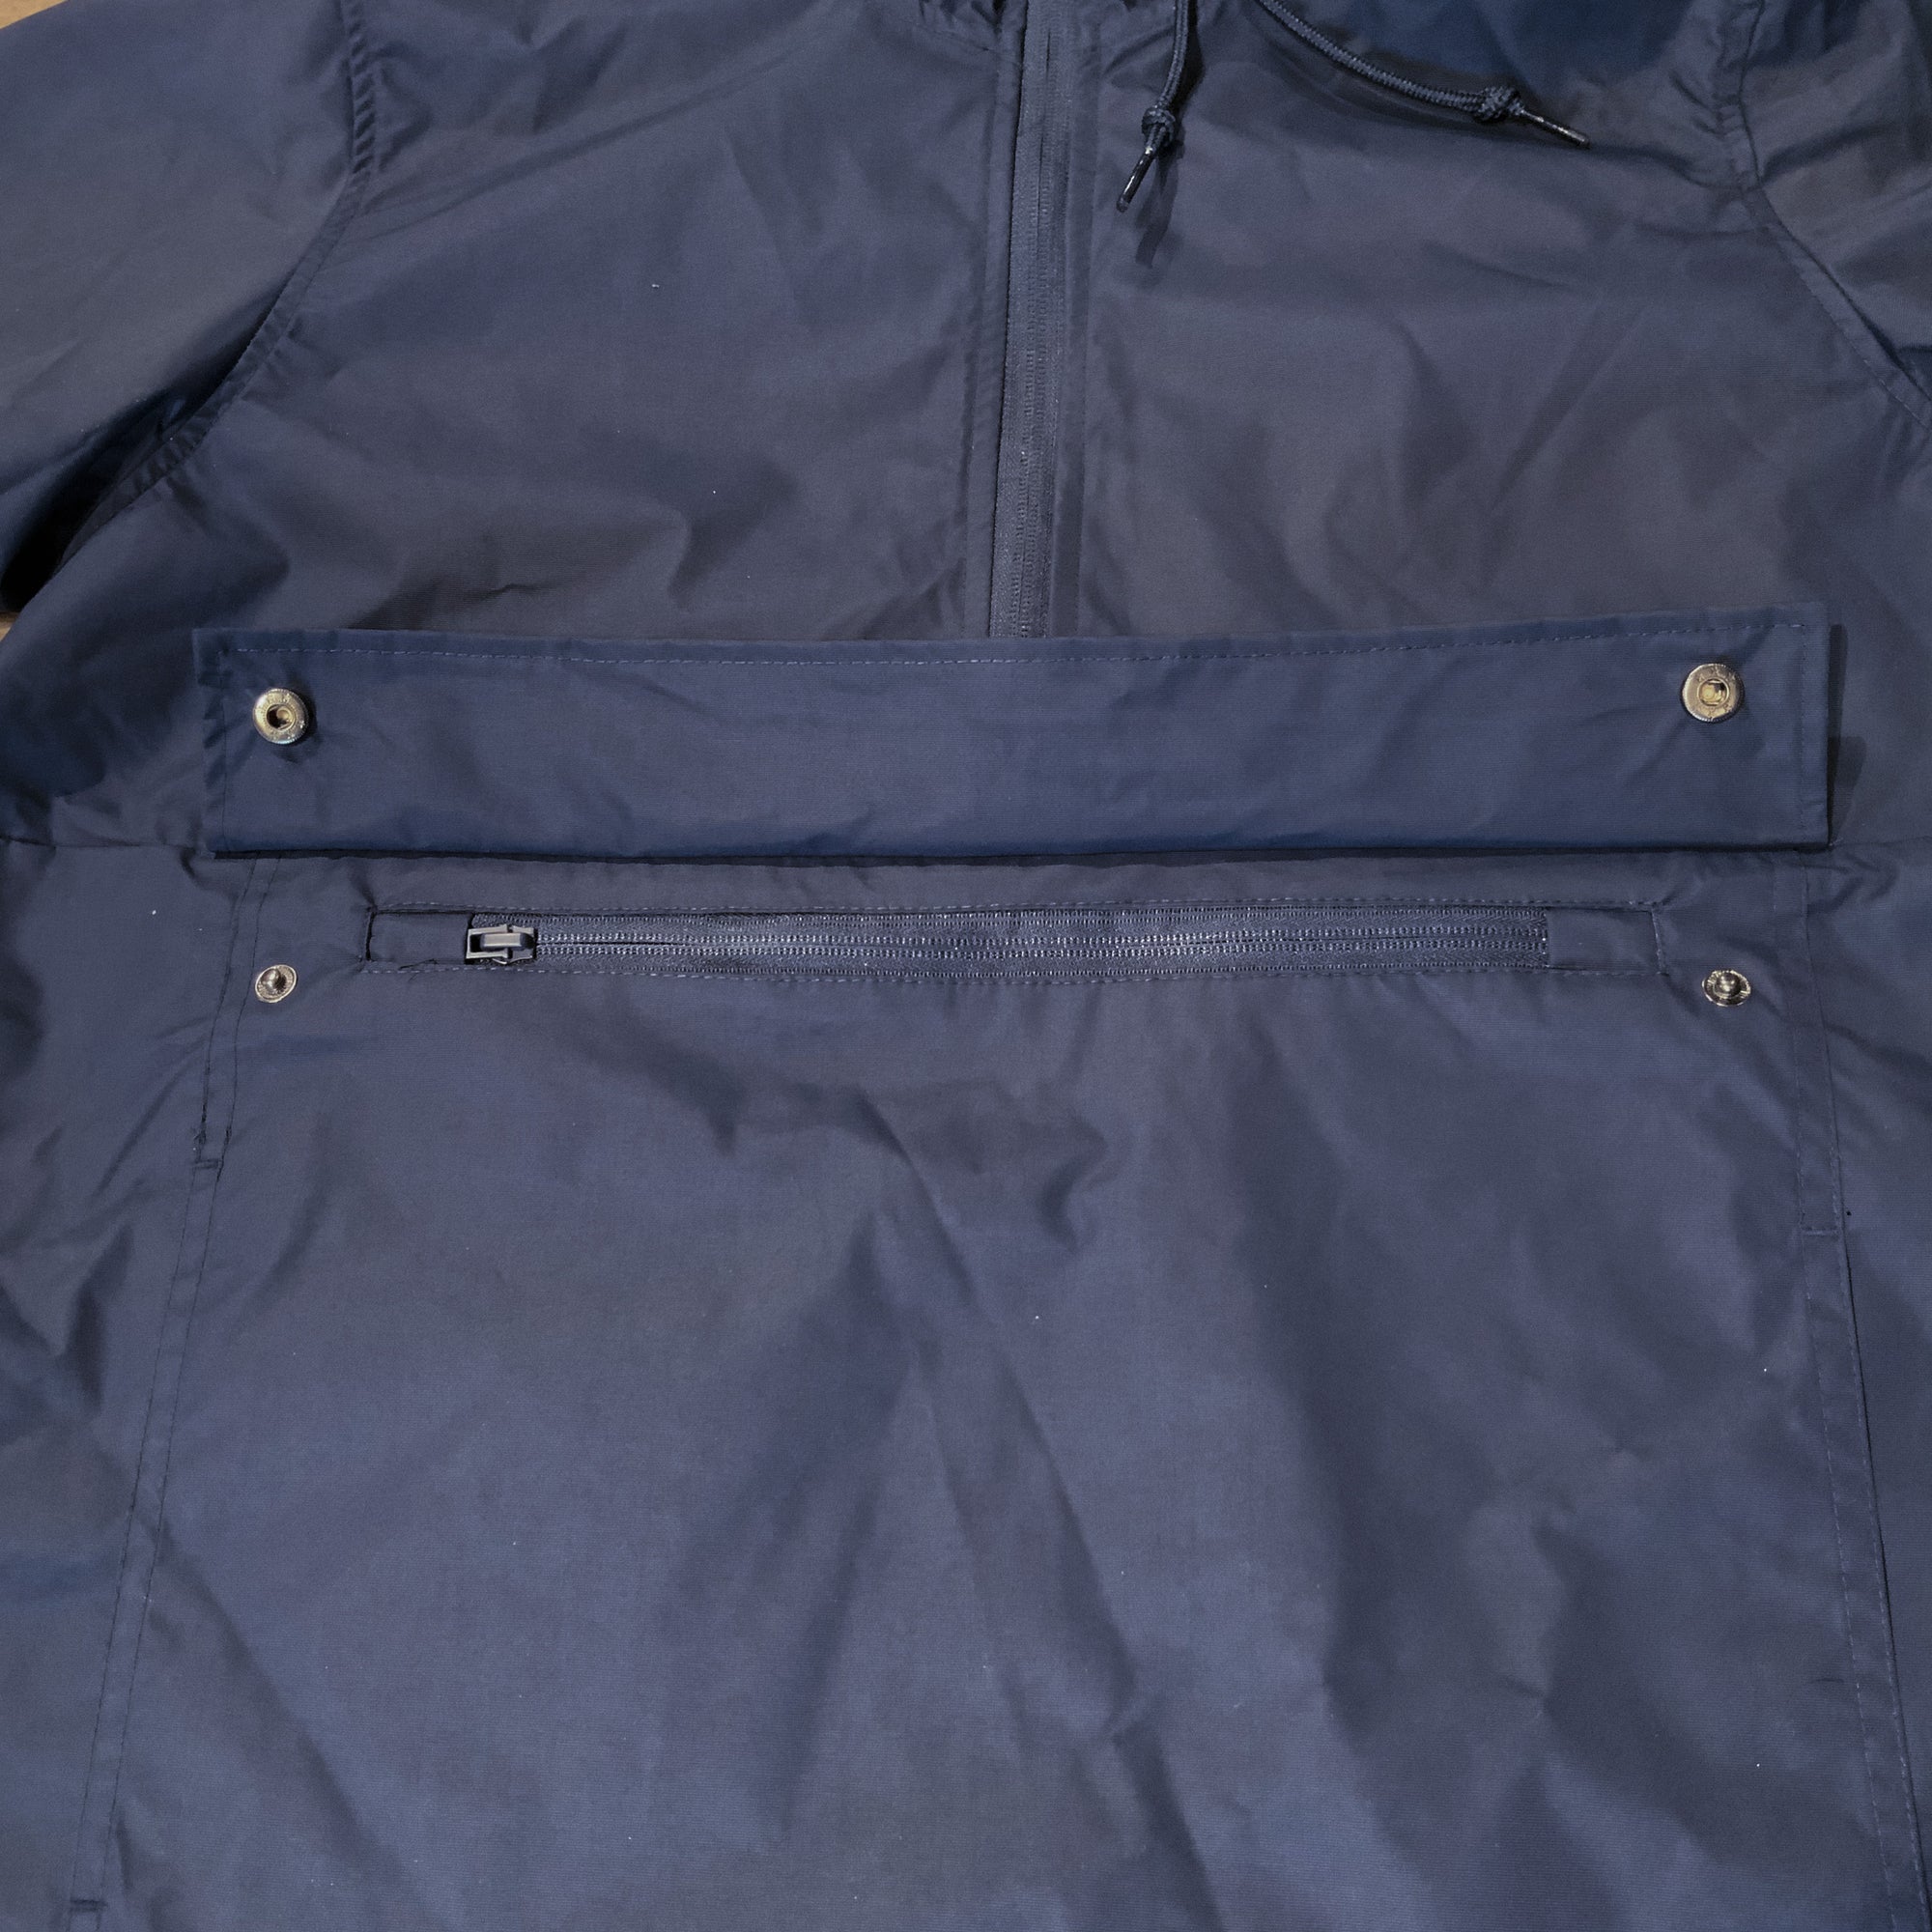 Sportfish Outfitters Lightweight Half-Zip Pullover Jacket